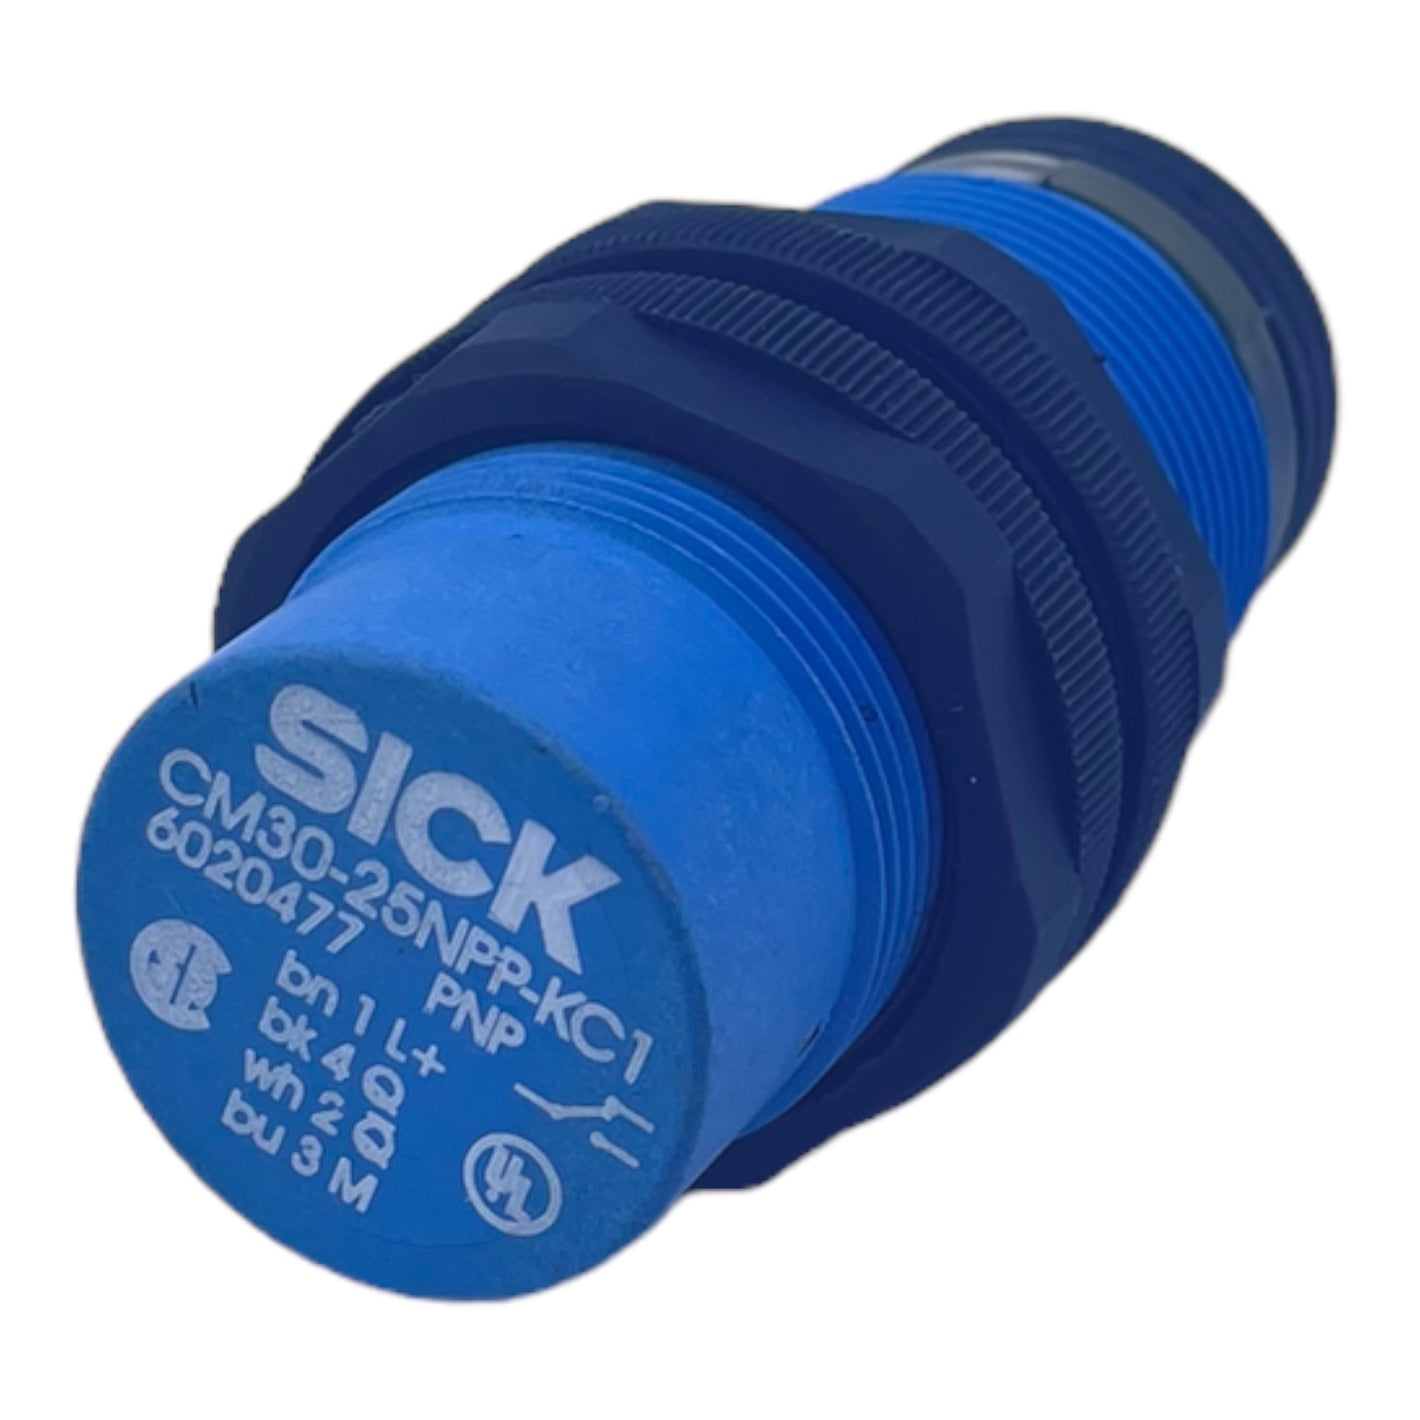 Sick CM30-25NPP-KC1 proximity sensor for industrial use 6020477 Sensor 